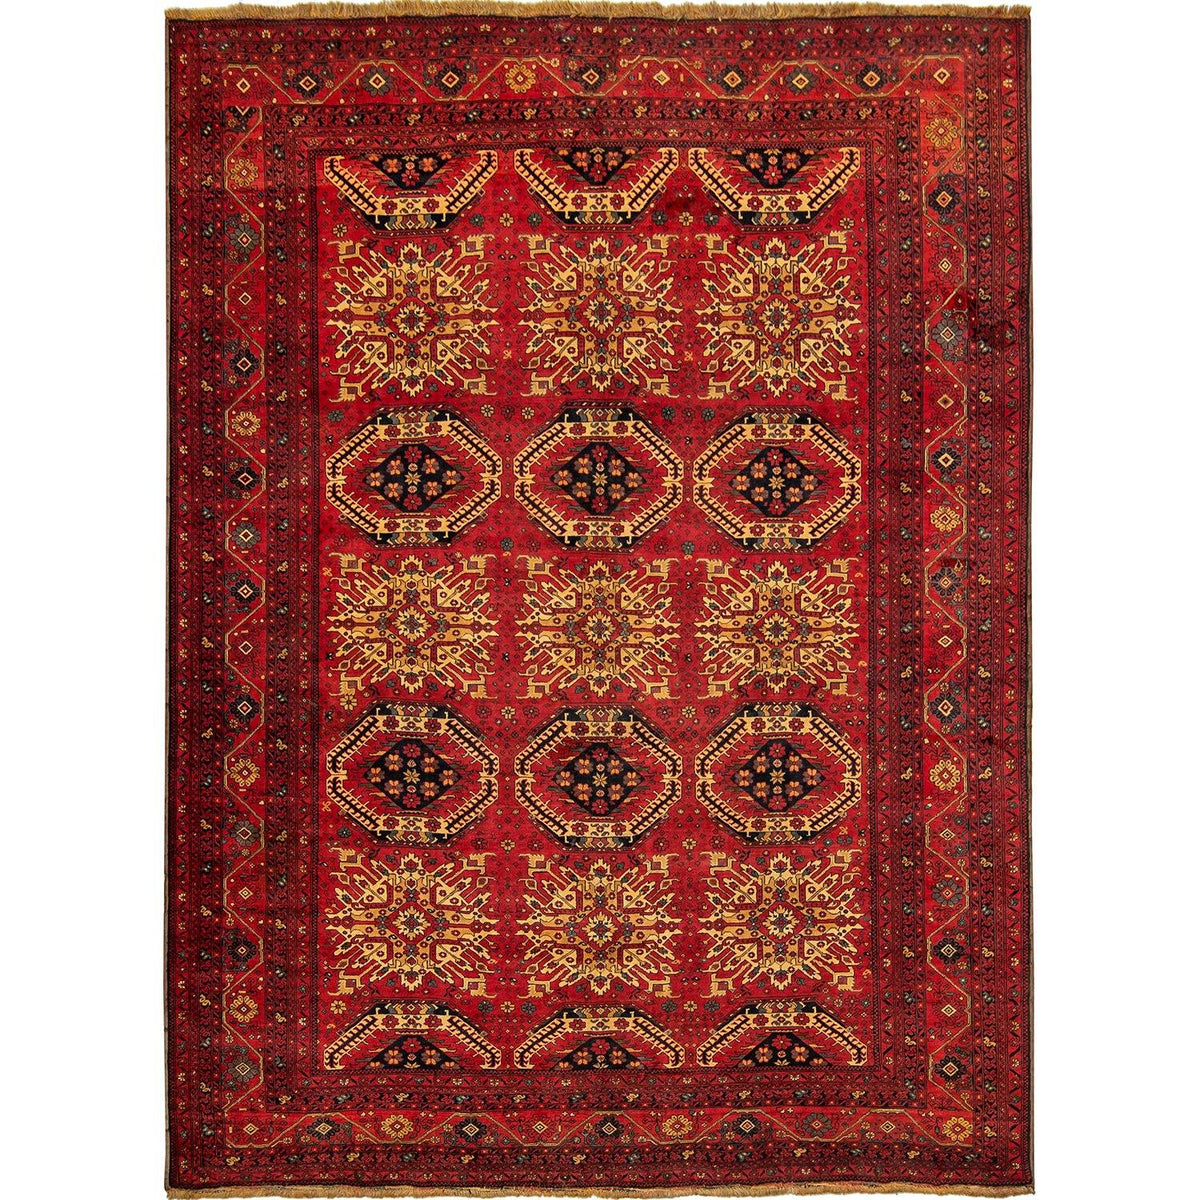 Fine Hand-knotted Tribal Wool Turkmen Rug 207cm x 280cm